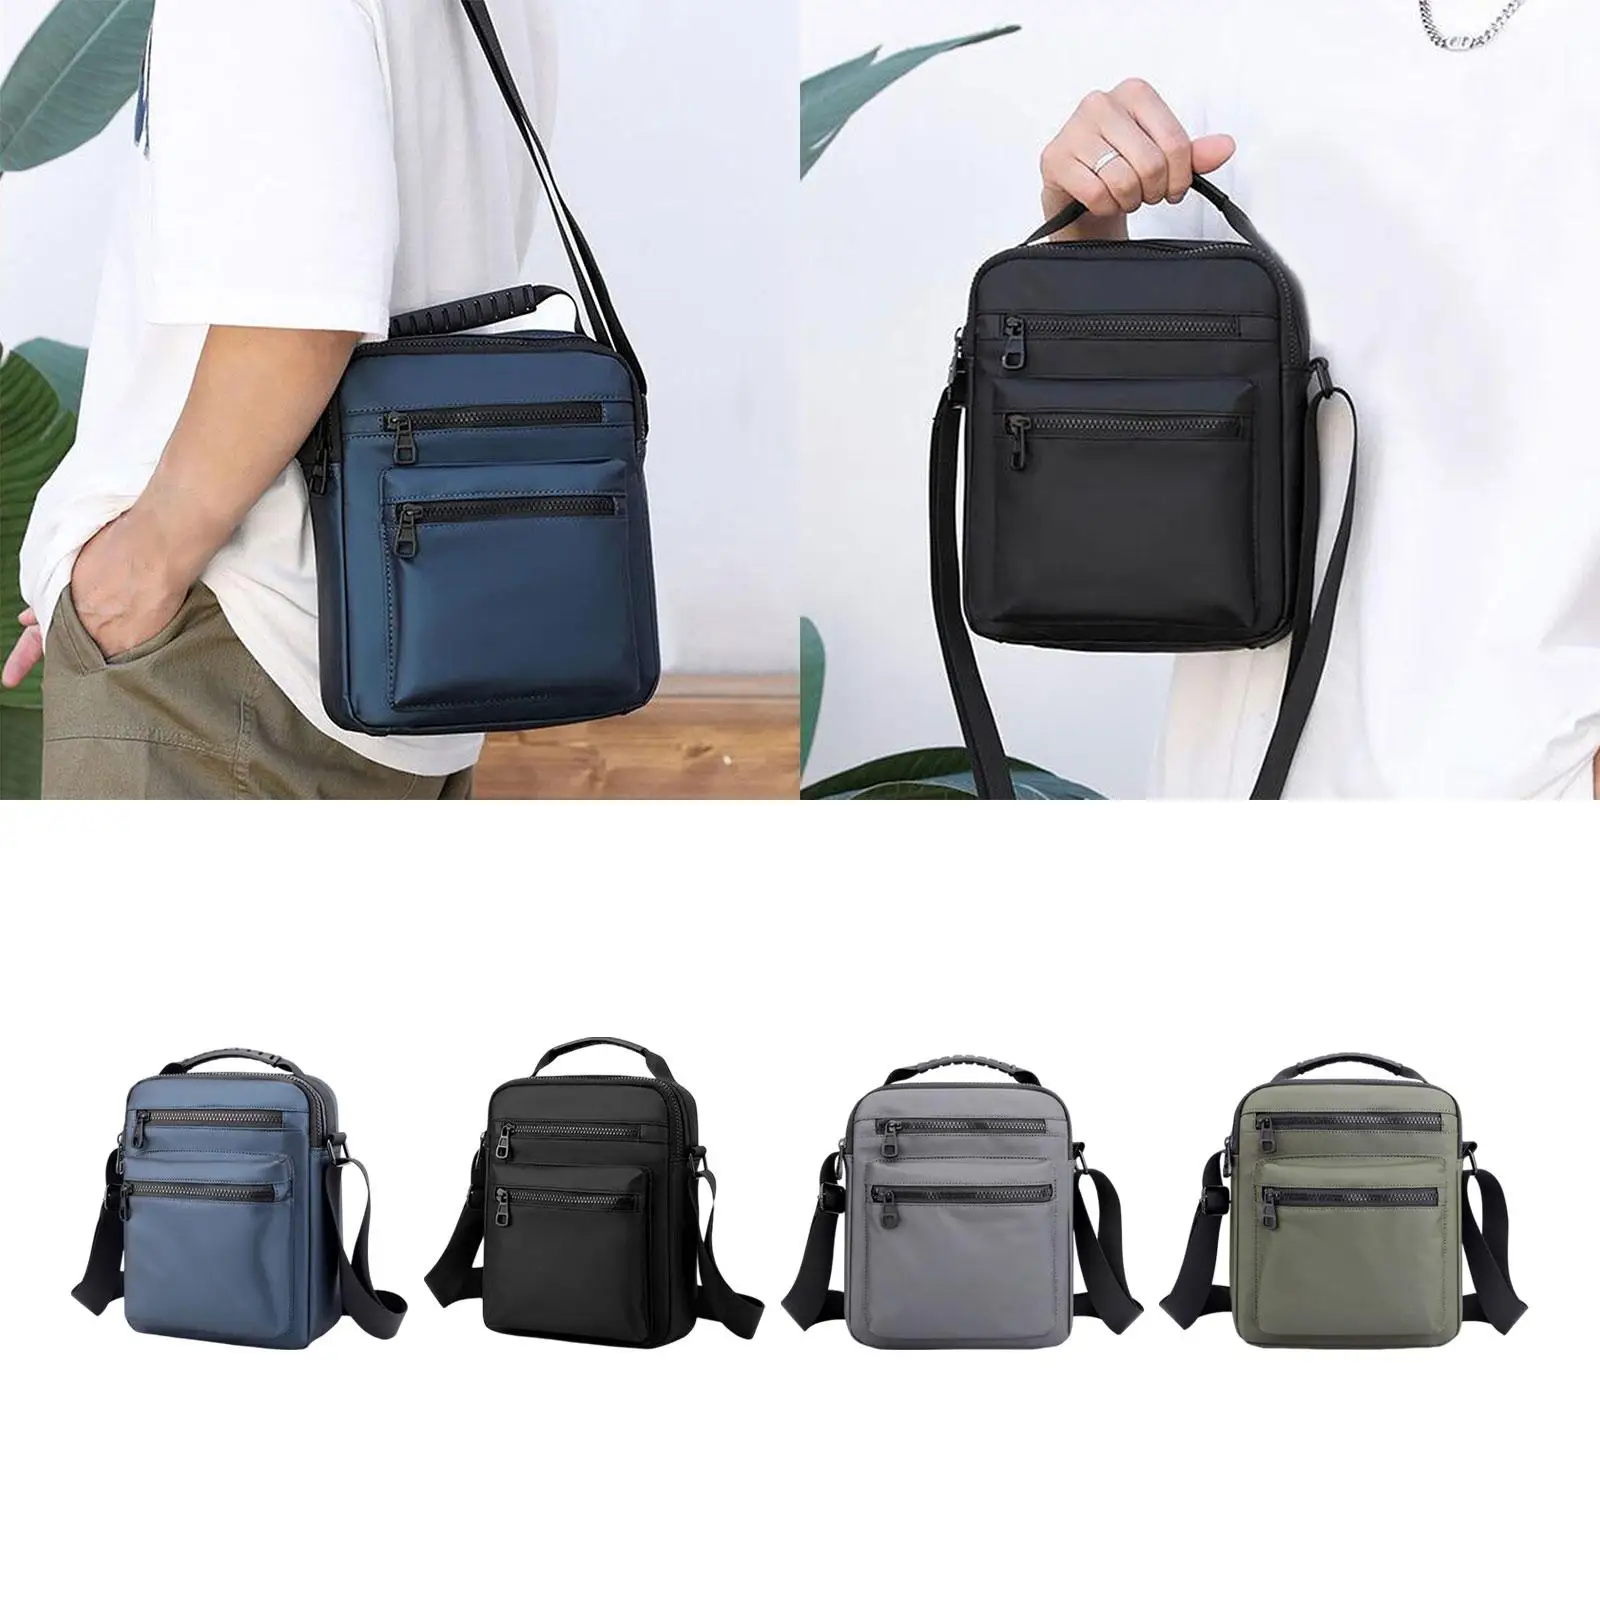 Men`s Messenger Bag Shoulder Sling Pack Handbag Gift for Family Friends Satchel Bag for Daily Use Traveling Work Cycling Camping